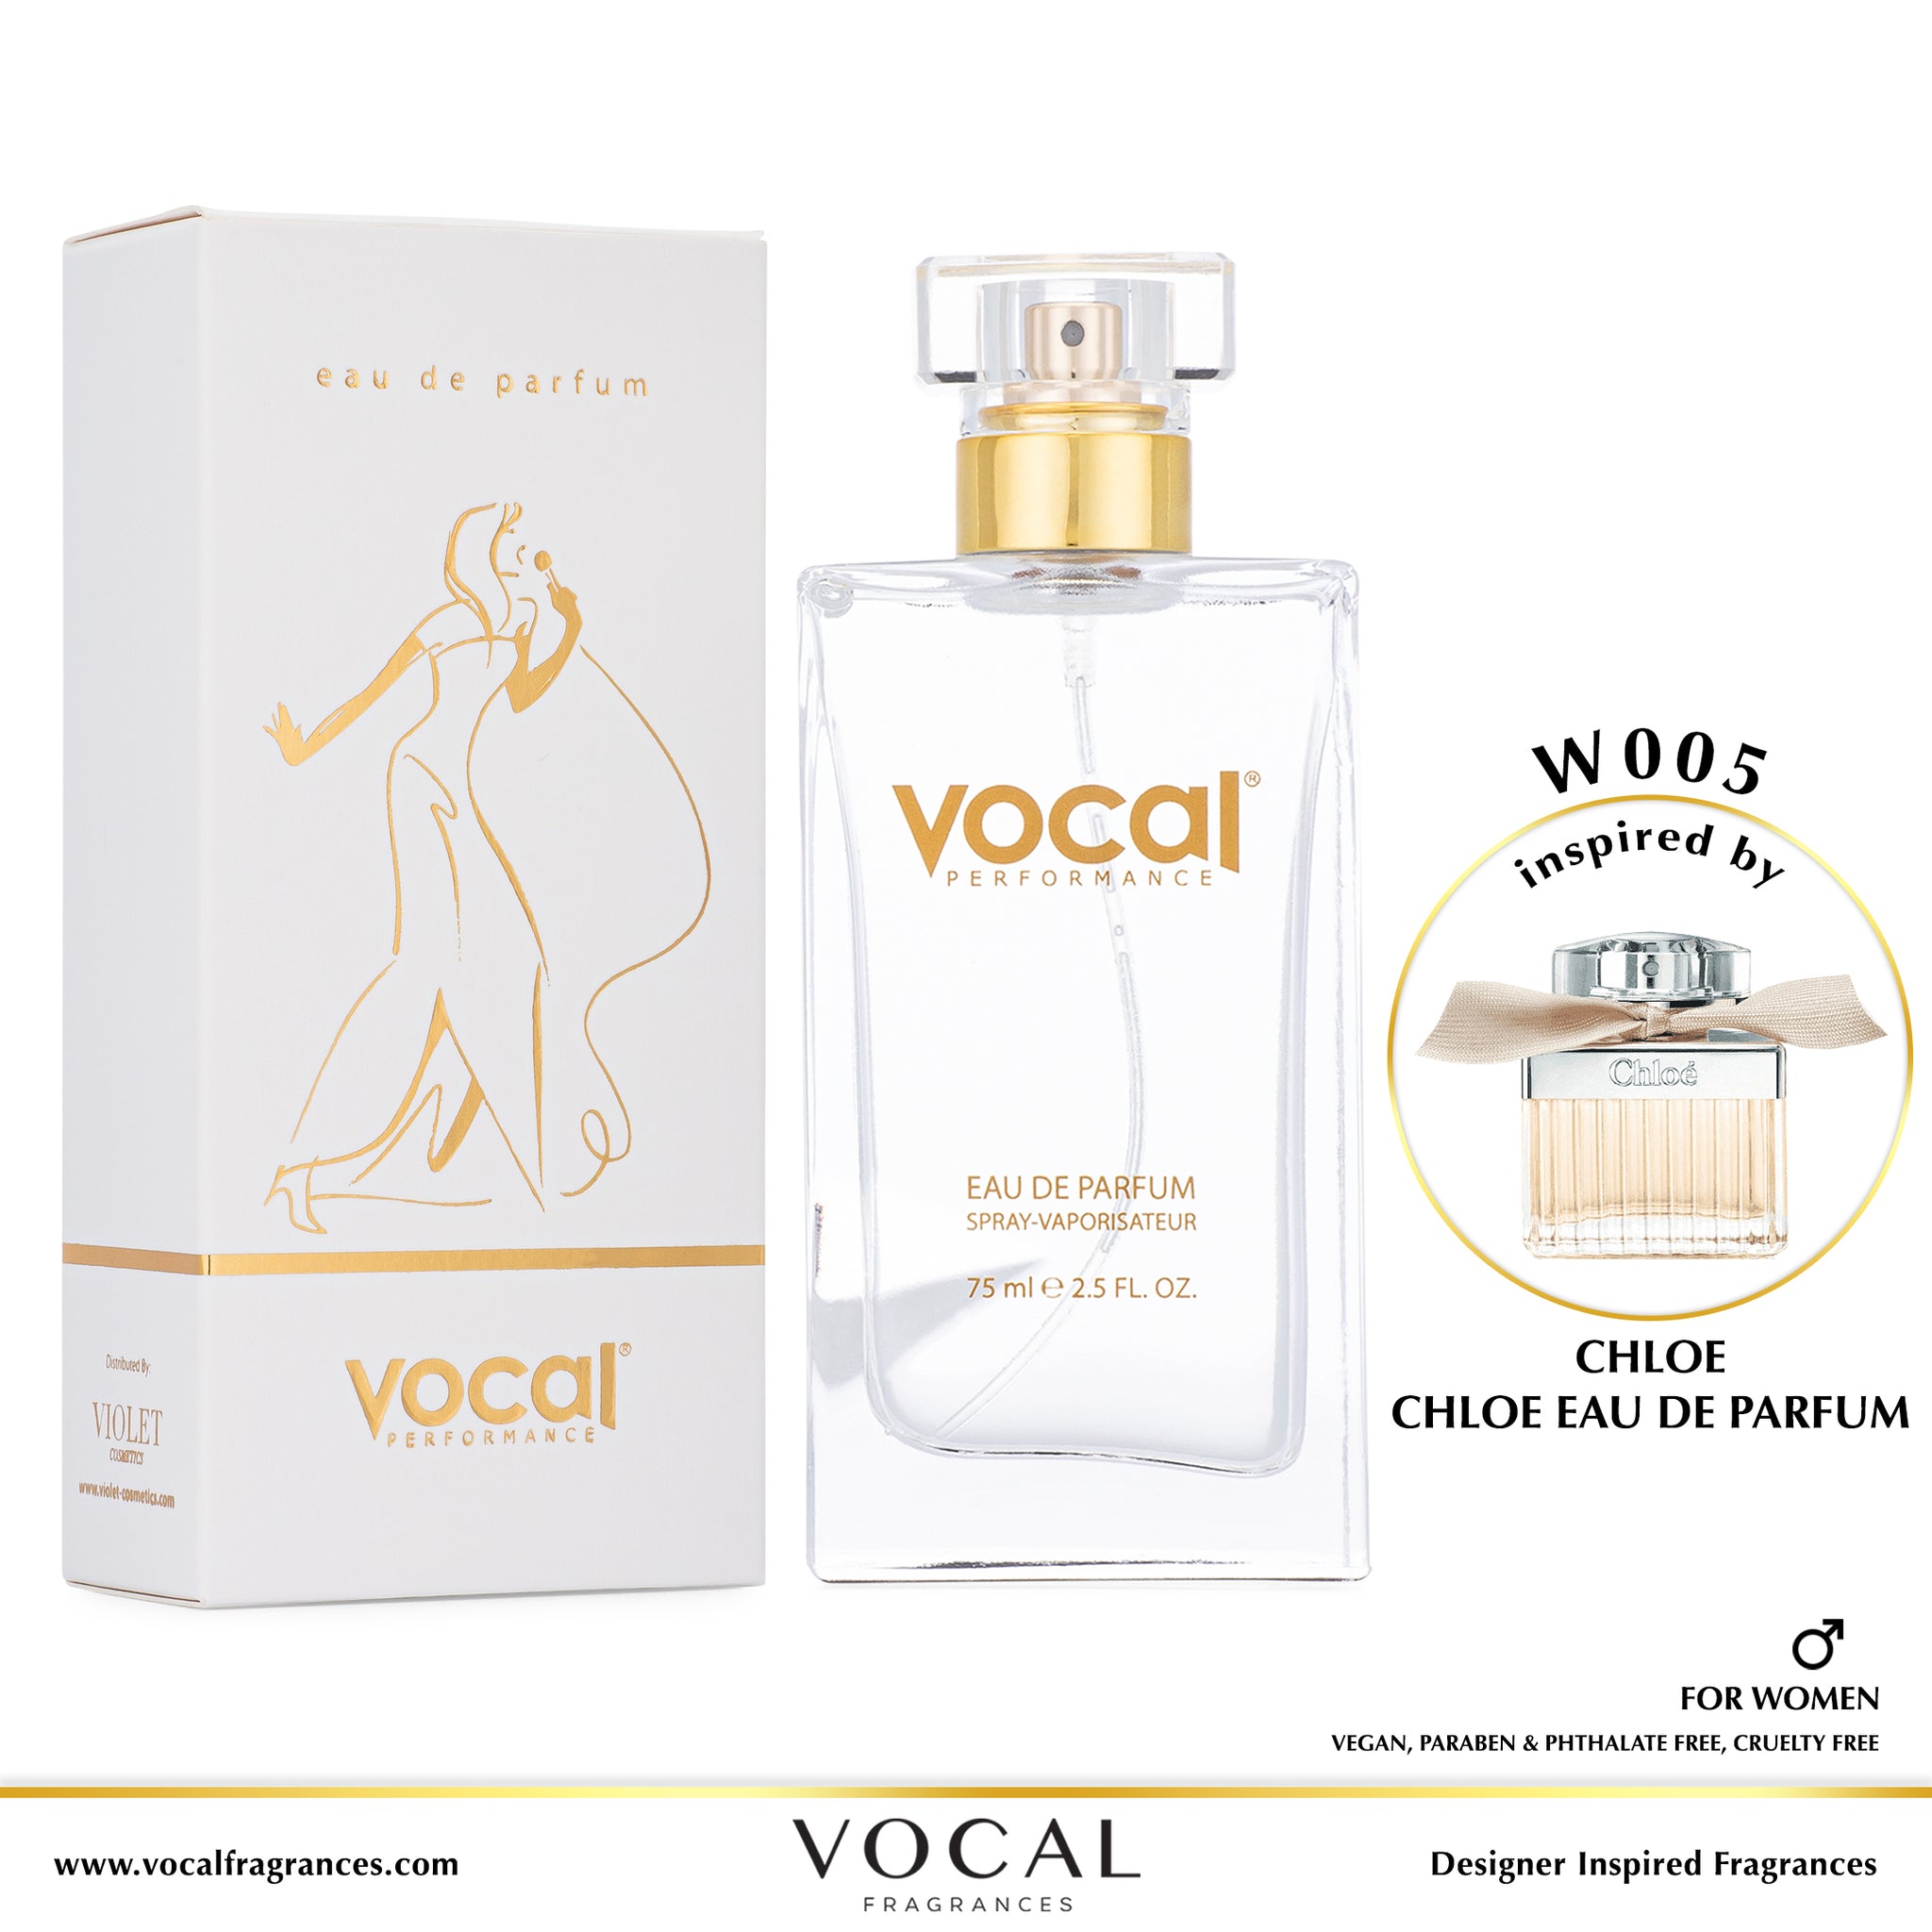 W005 Vocal Performance Eau De Parfum For Women Inspired by Chloe